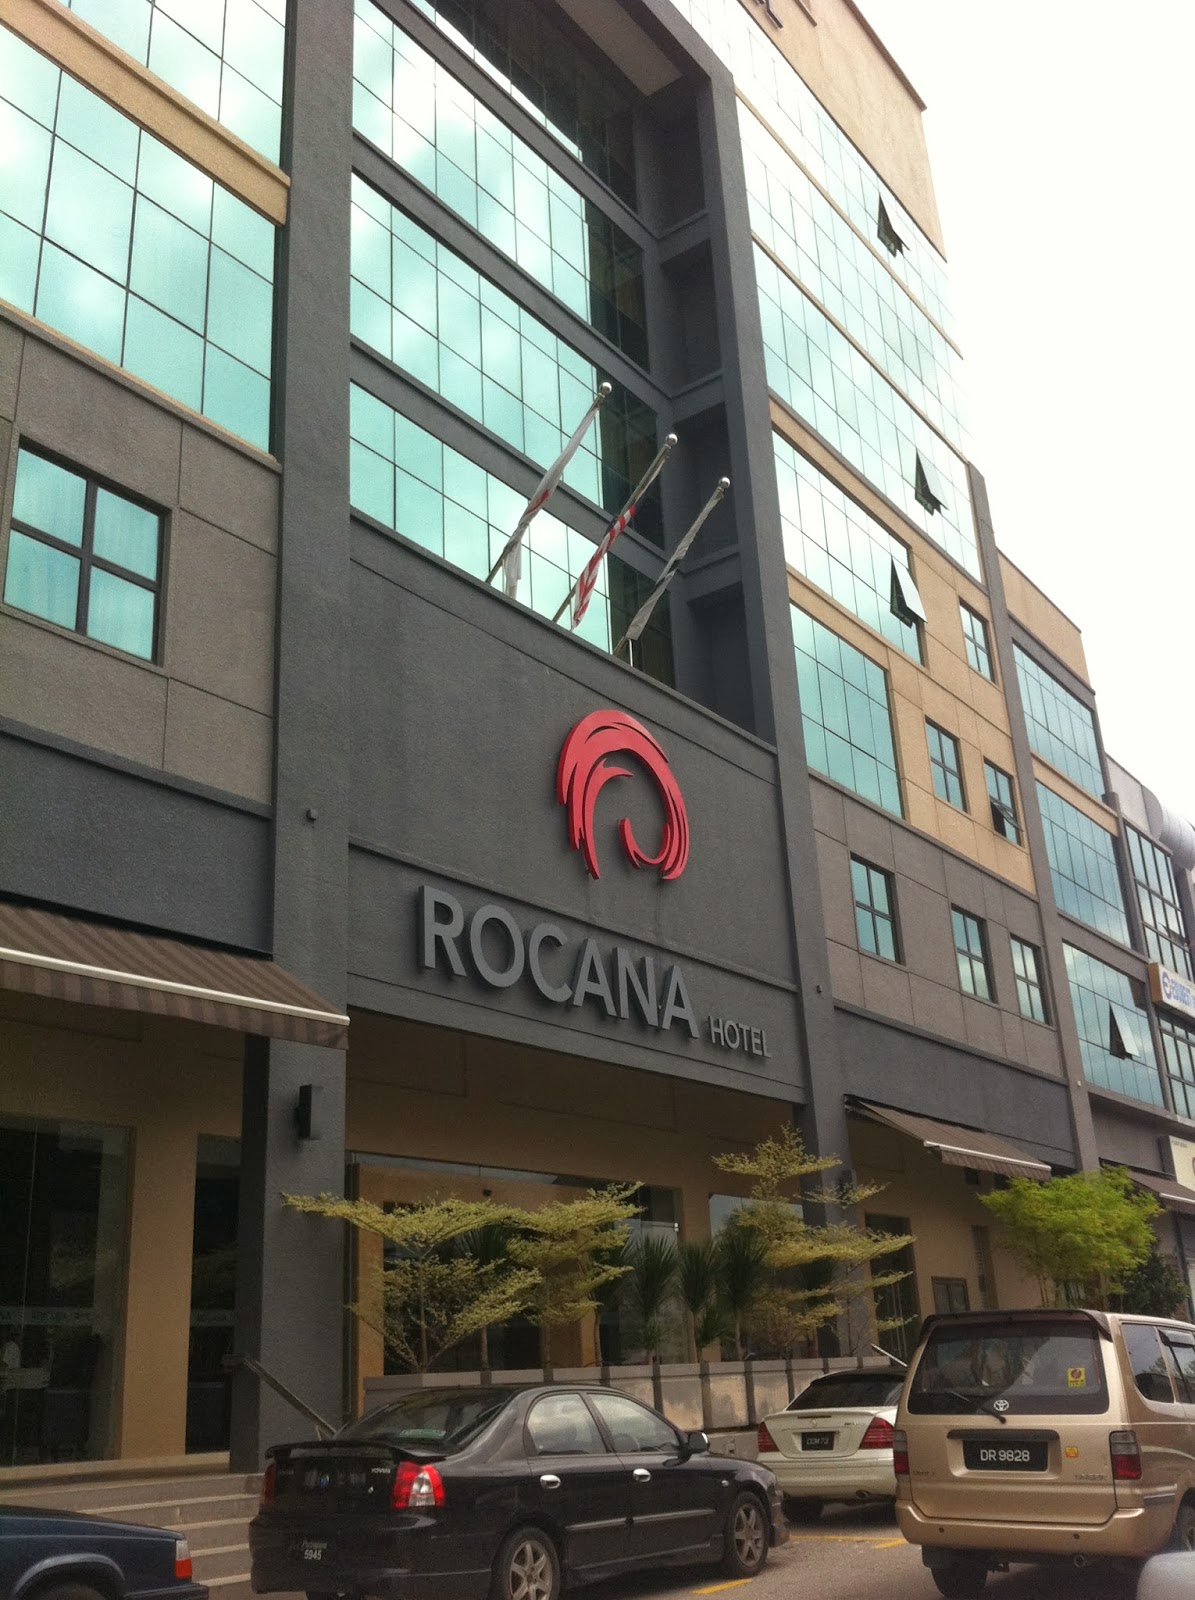 Rocana hotel